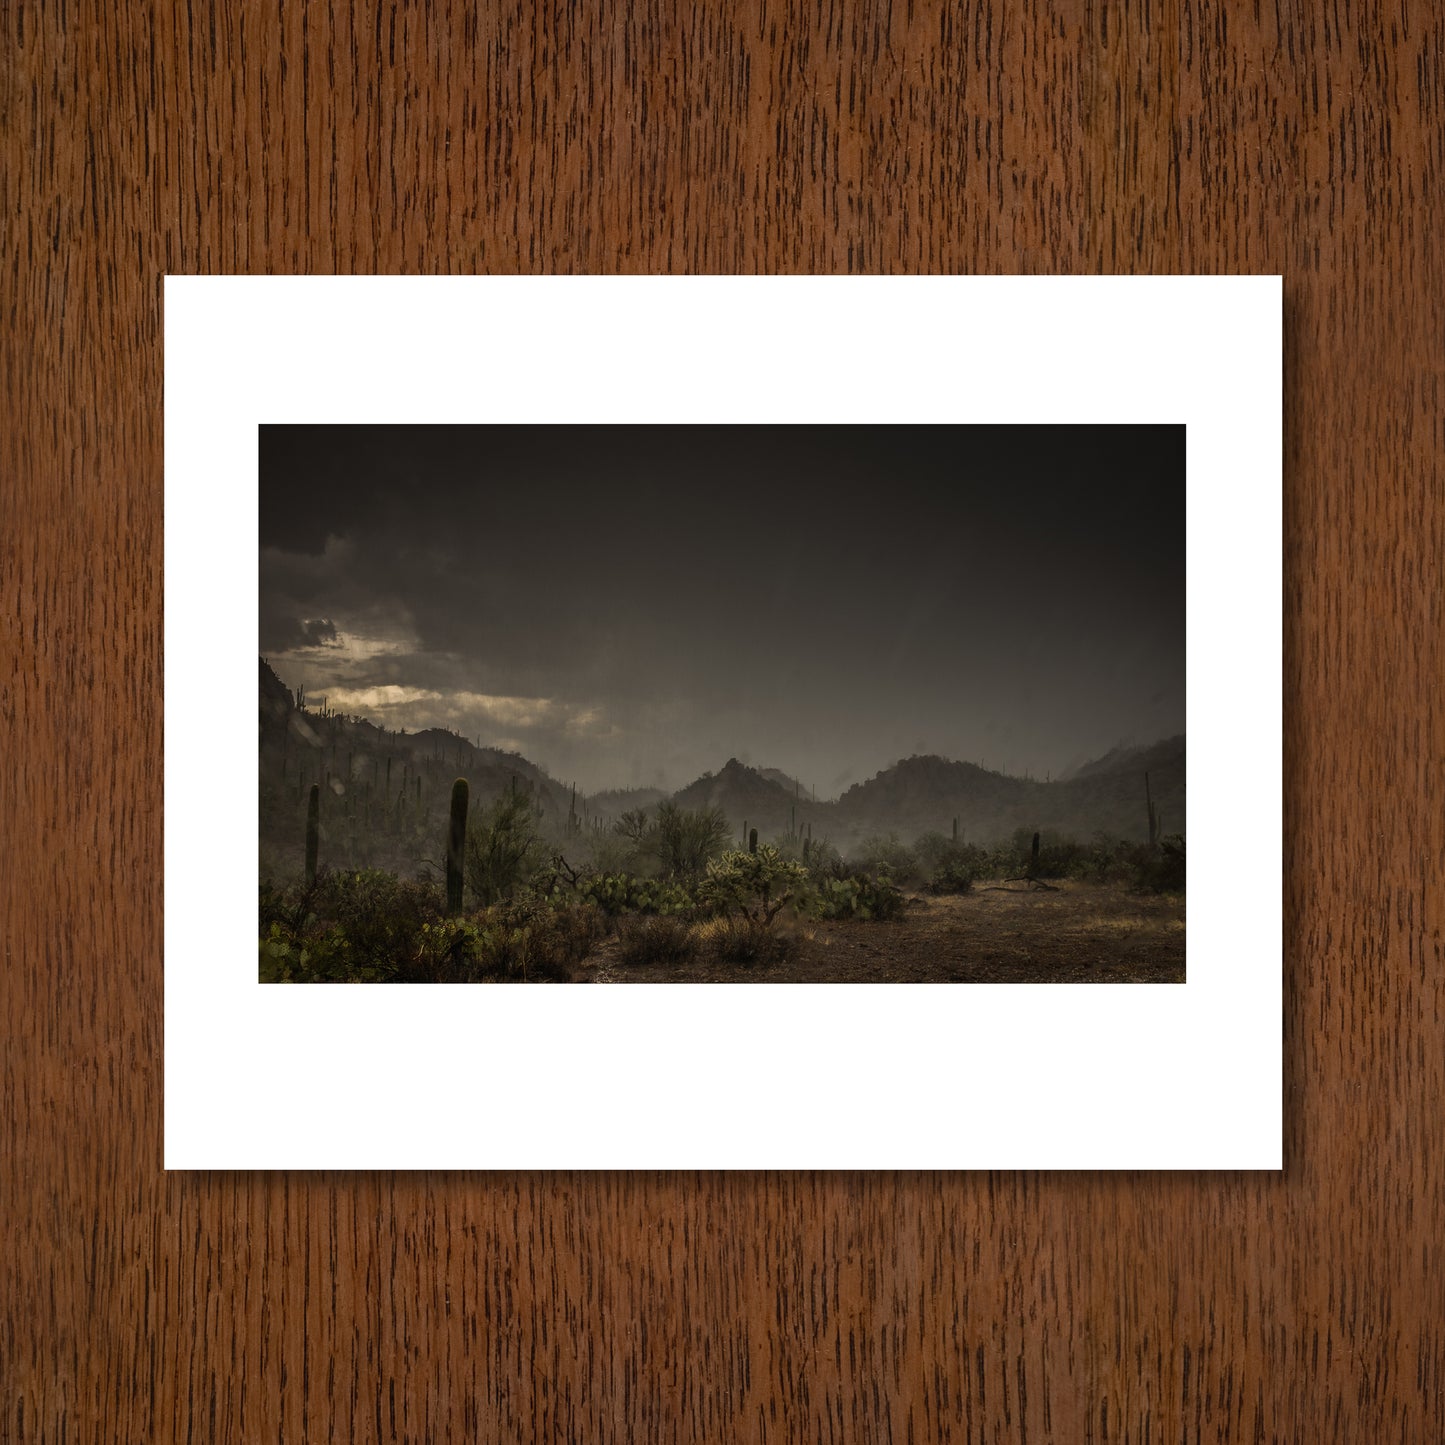 Rainstorm, Saguaro National Park